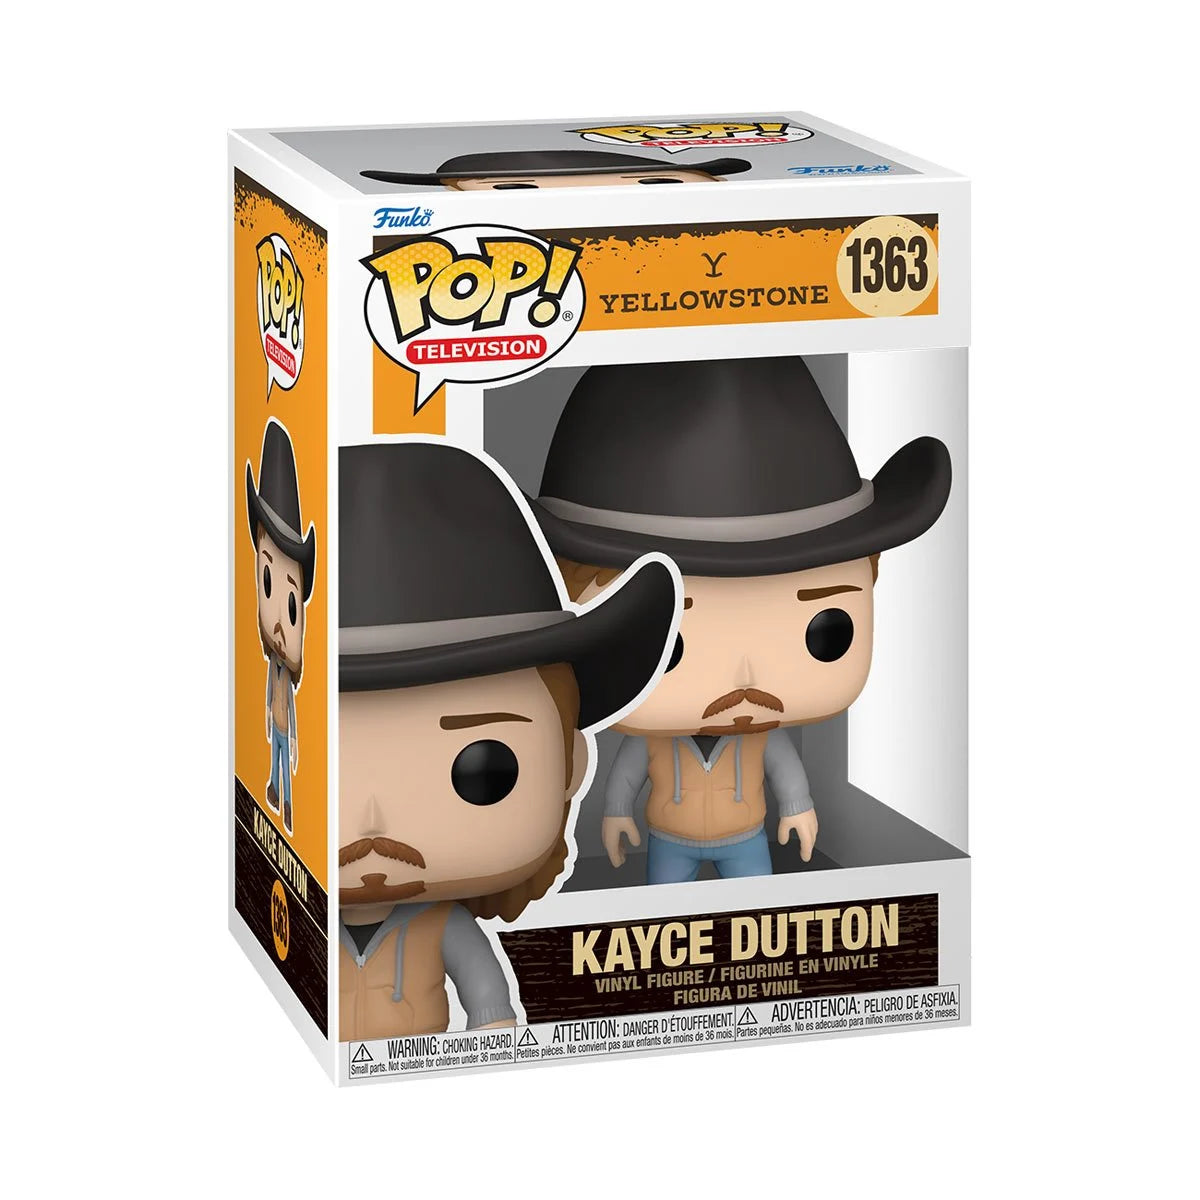 Yellowstone Kayce Dutton Pop! Vinyl Figure #1363 in a box - Heretoserveyou